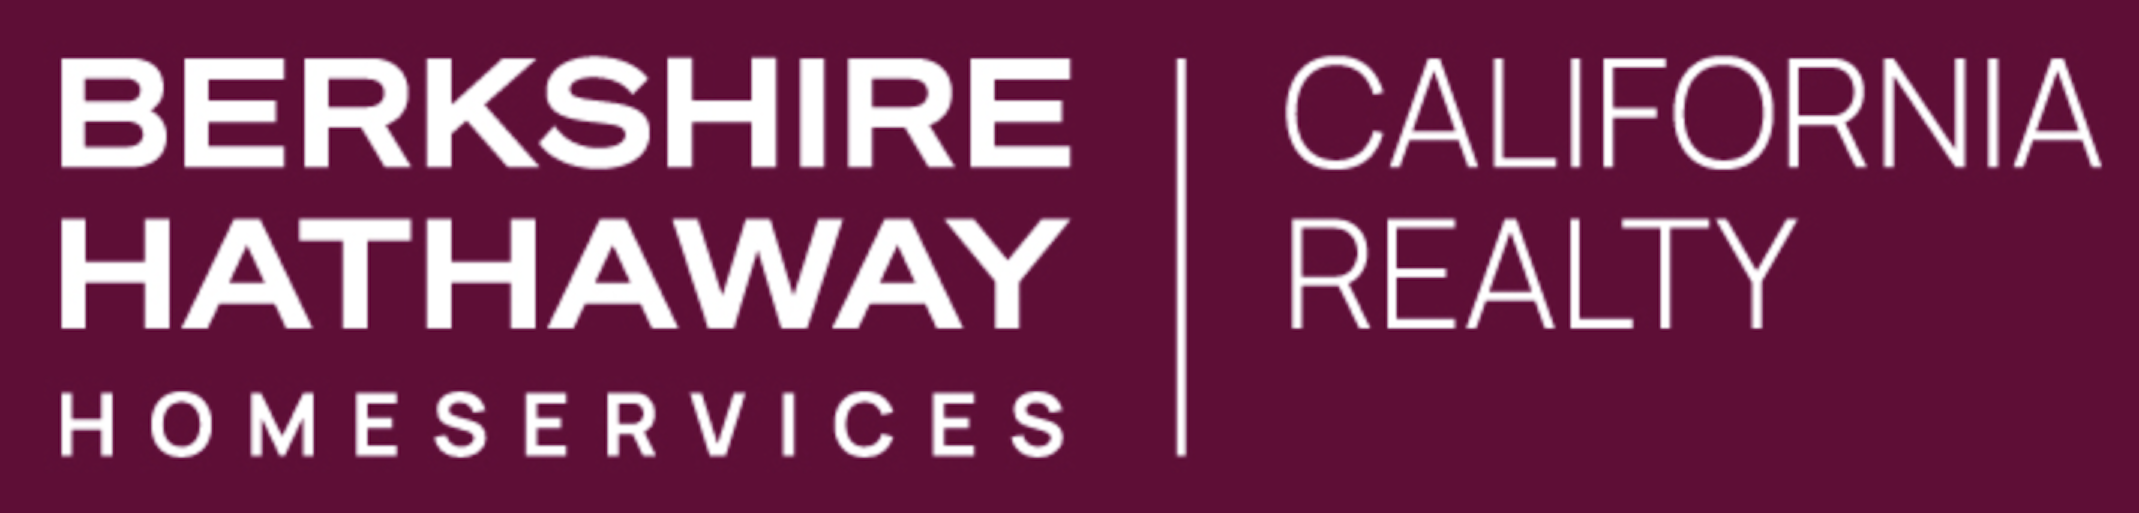 Berkshire Hathaway HomeServices California Realty Logo